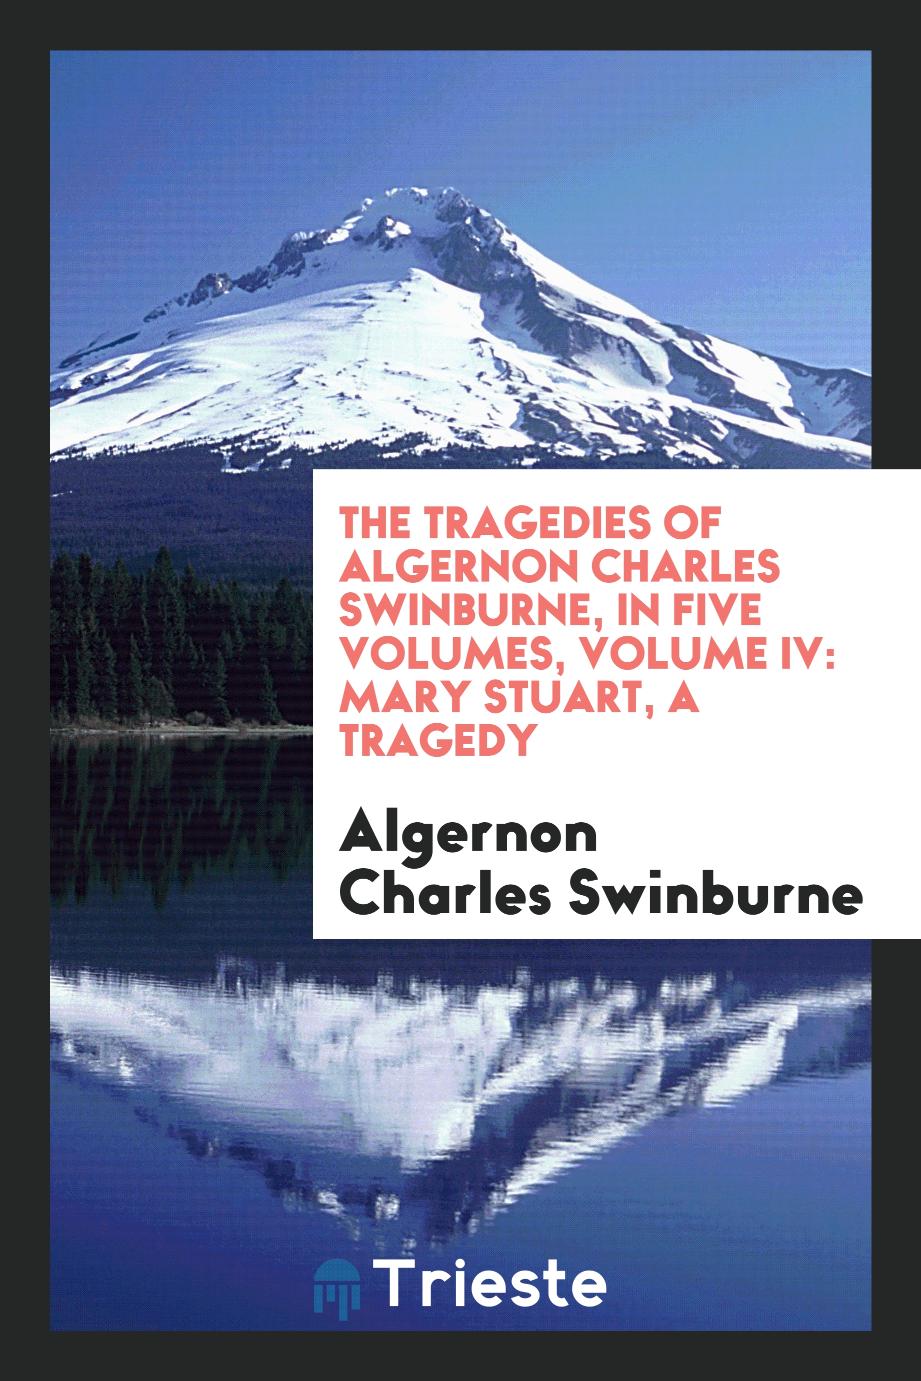 The Tragedies of Algernon Charles Swinburne, in Five Volumes, Volume IV: Mary Stuart, a Tragedy